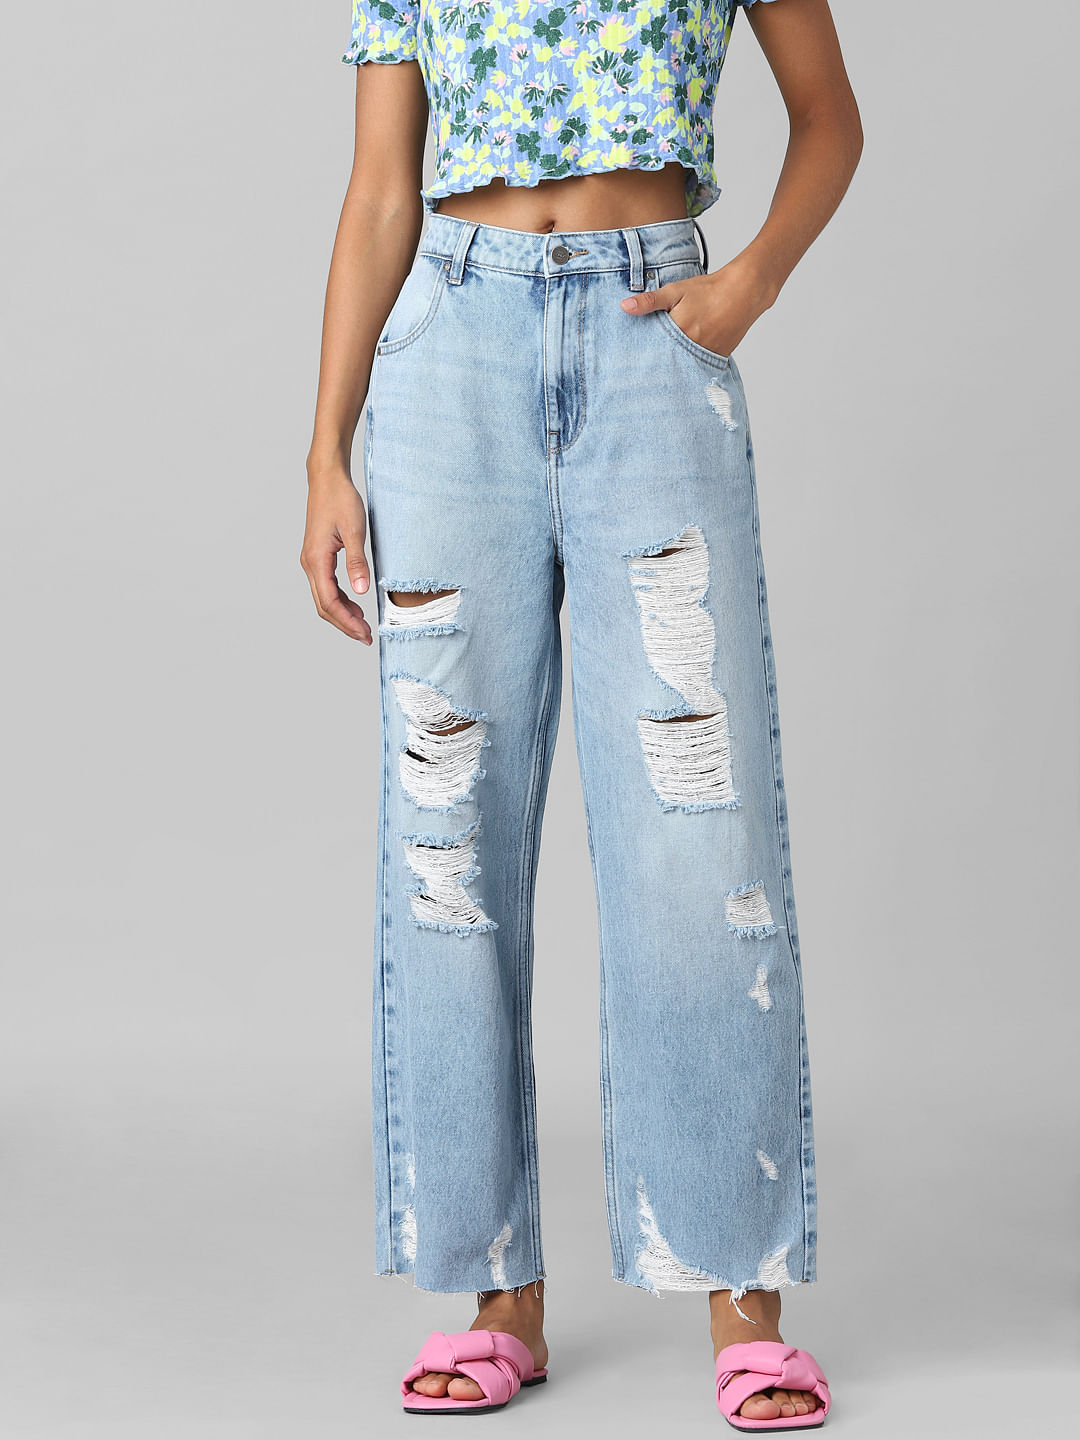 Zara Trafaluc High Waist Jeans blau Casual-Look Mode Jeans High Waist Jeans 